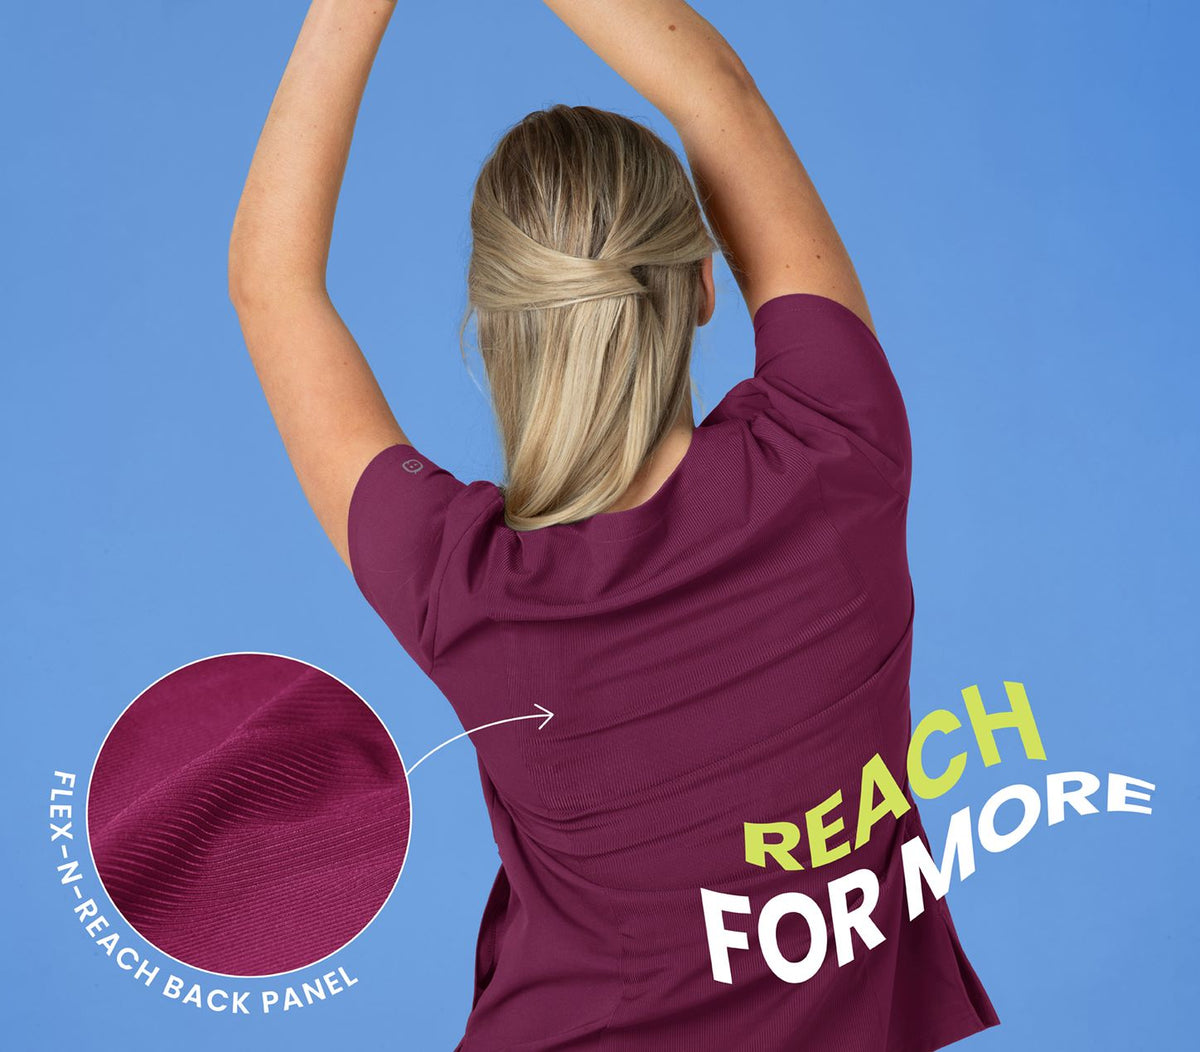 Flex-n-Reach back panel; reach for more. Comfortable Stretchy V-Neck Scrub Top